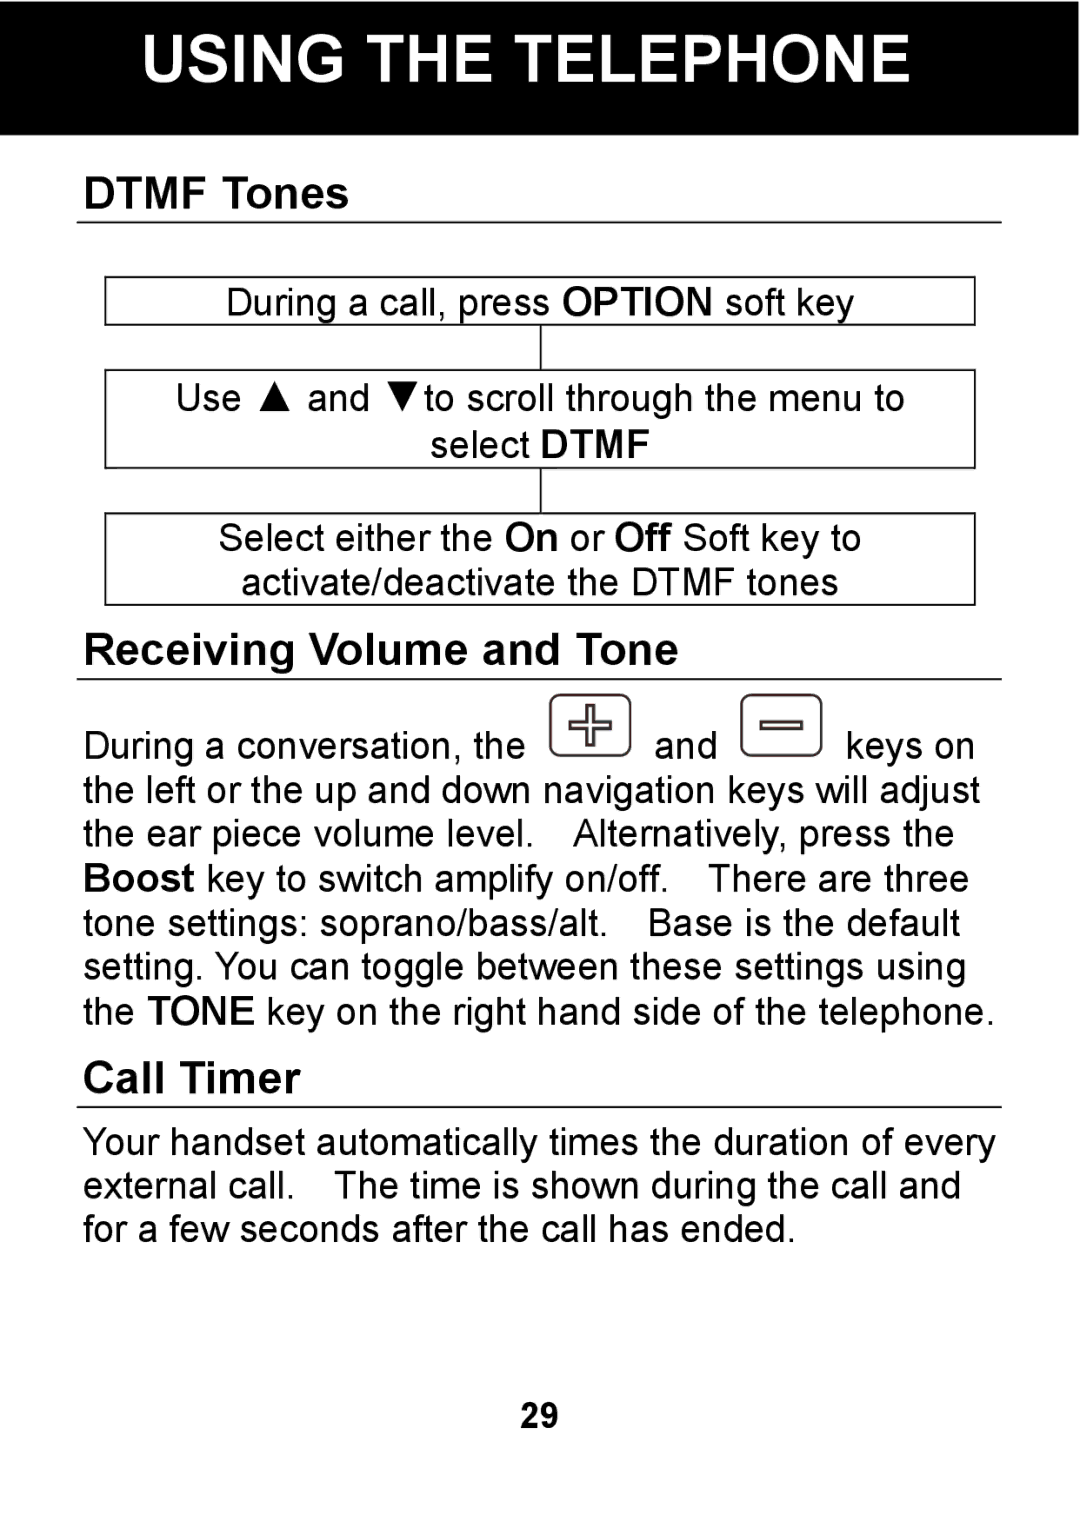 Pal/Pax PAL101 manual Dtmf Tones, Receiving Volume and Tone, Call Timer 